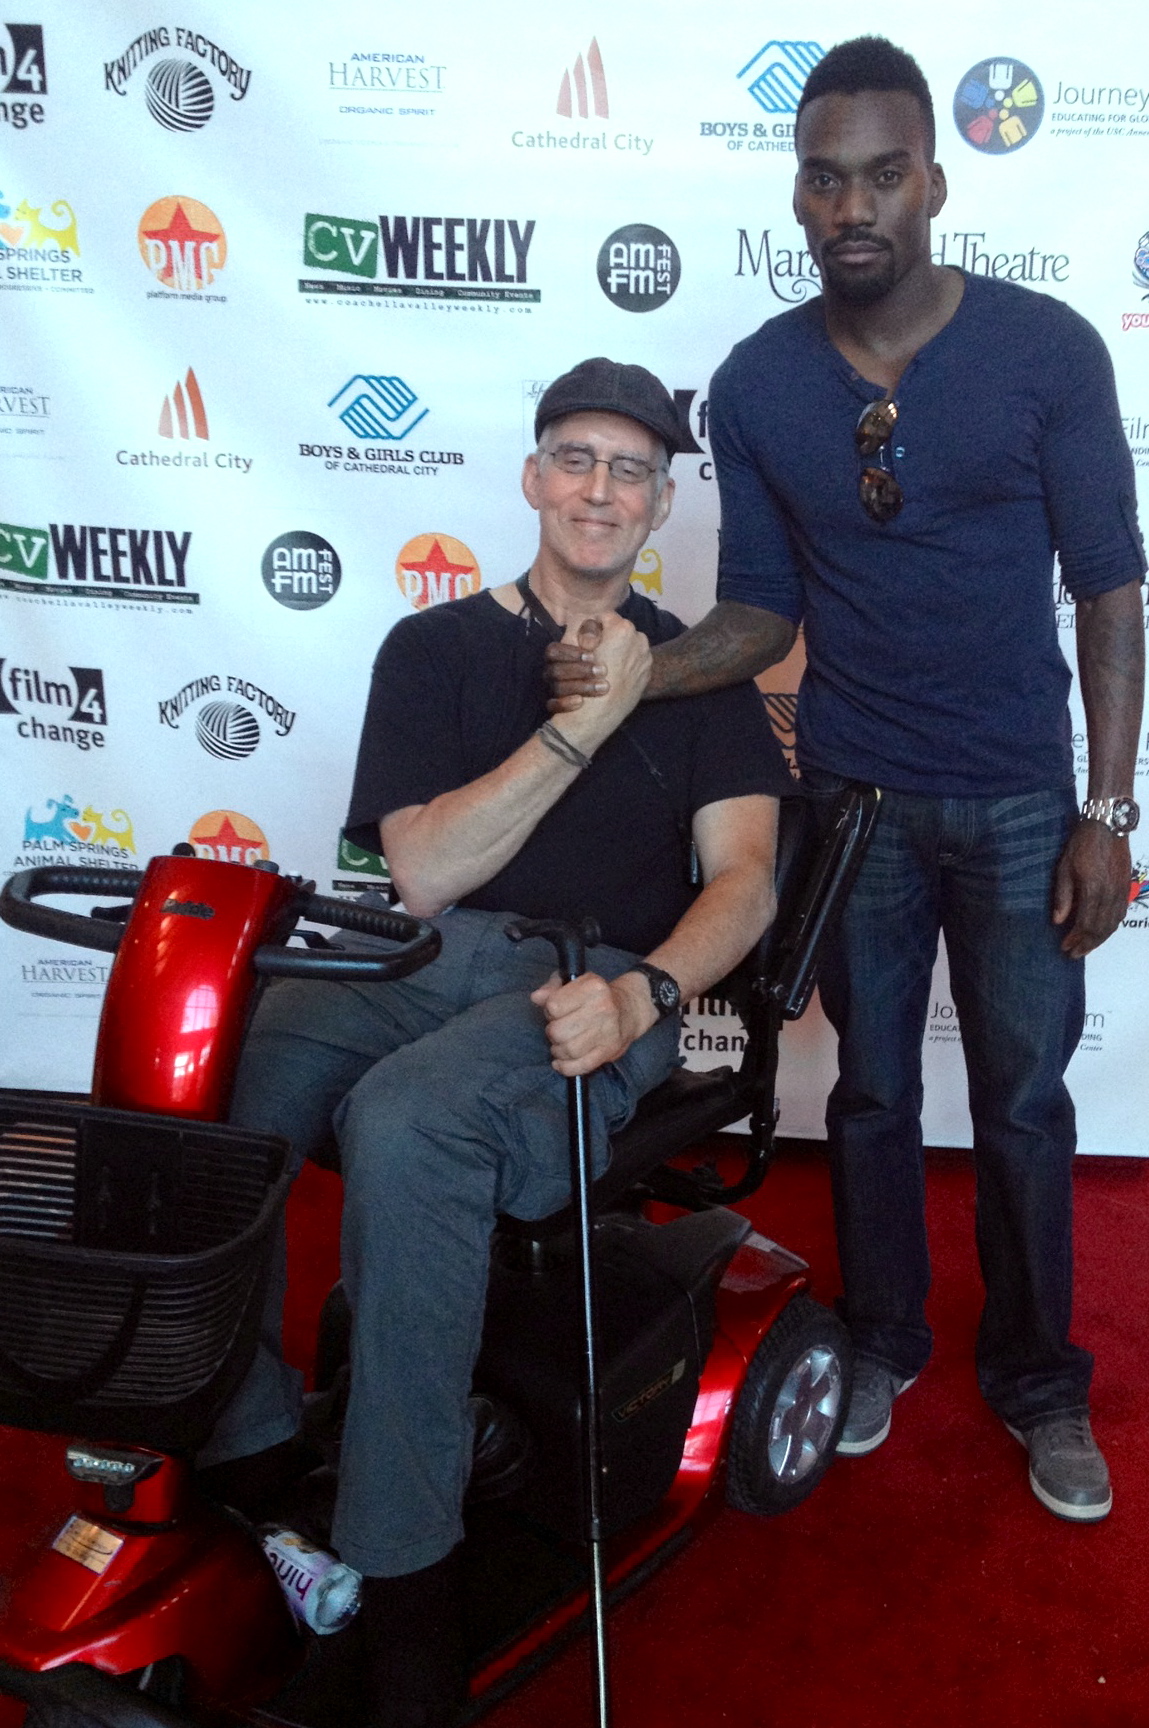 Tysen Knight and Robert Zuckerman (Photographer) at the AMFM Fest 2013